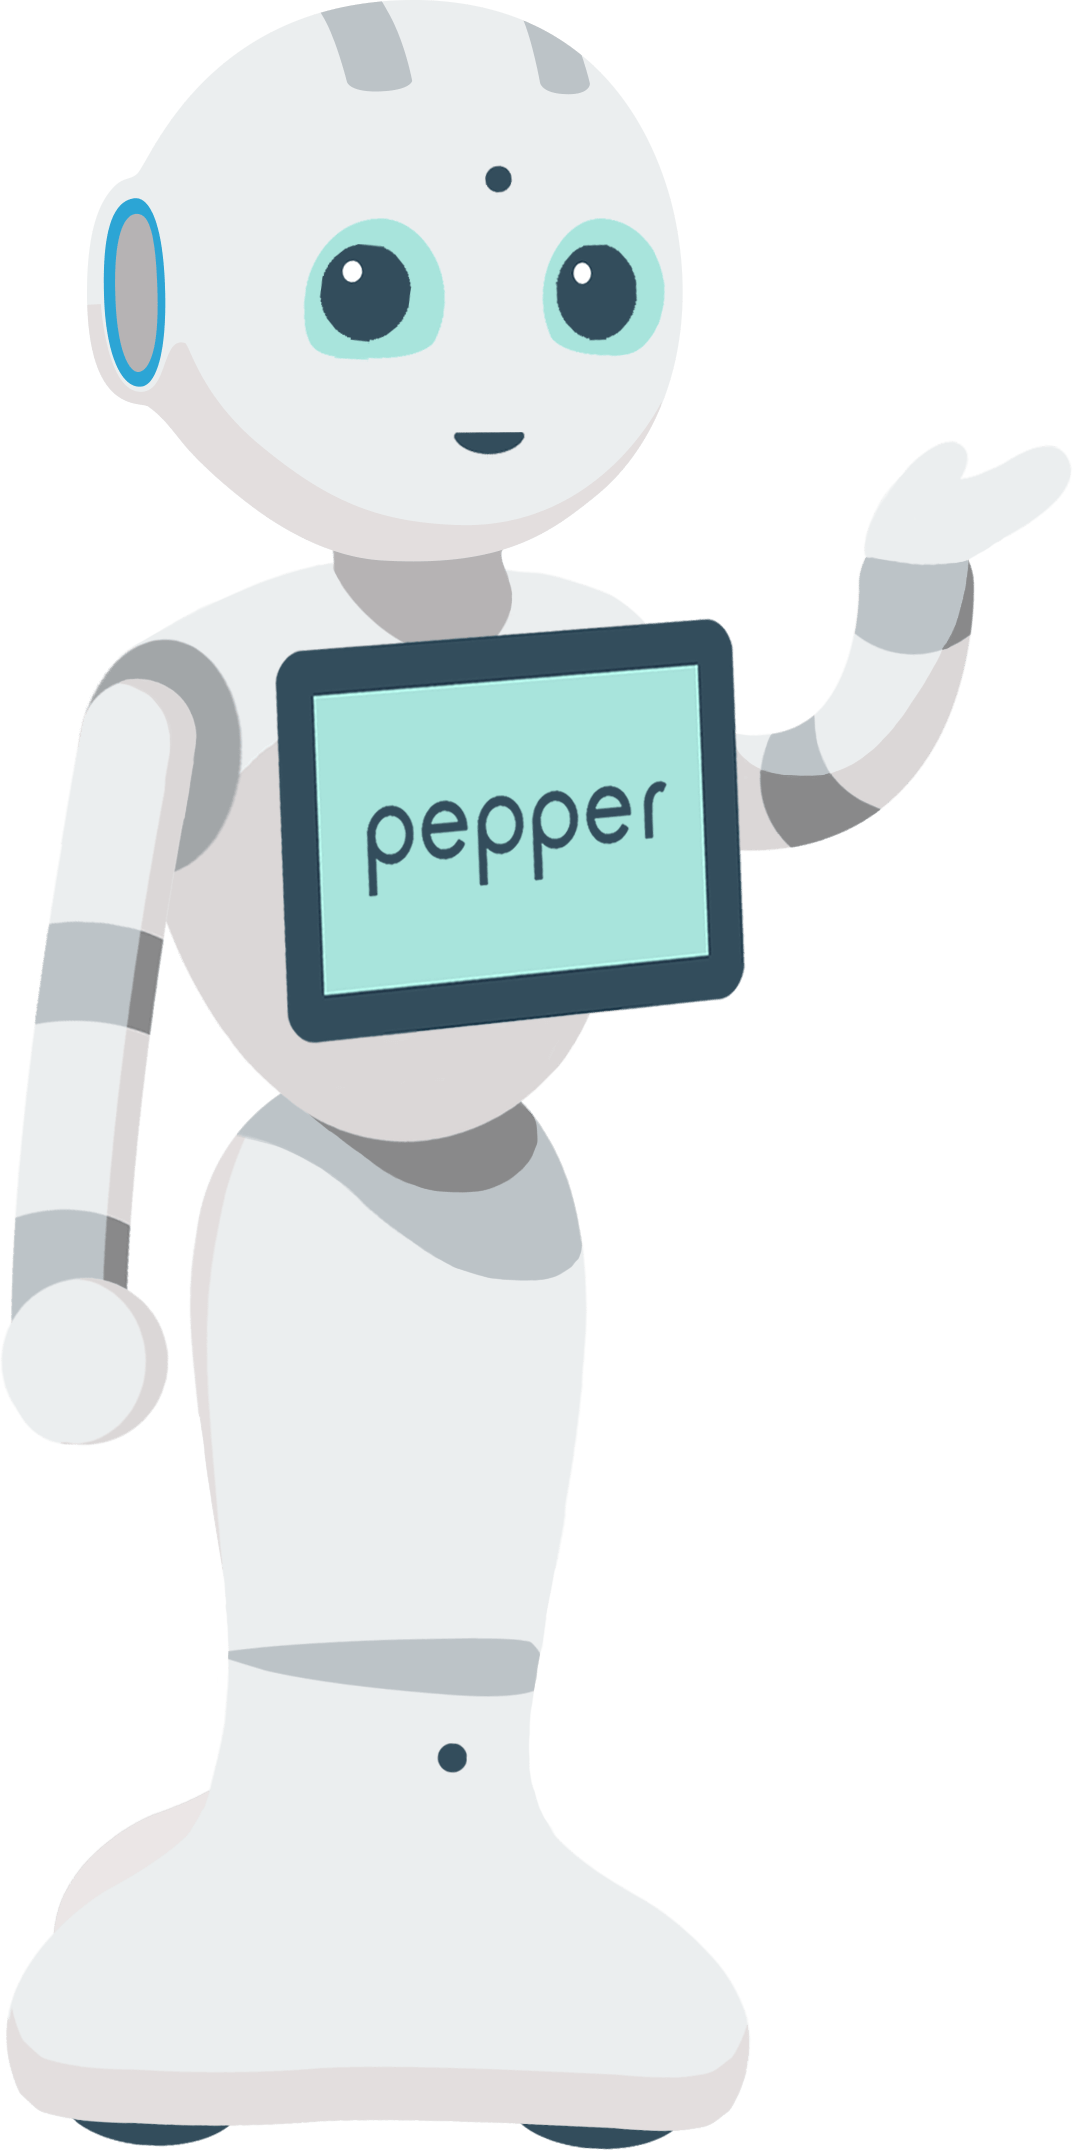 Pepper紹介